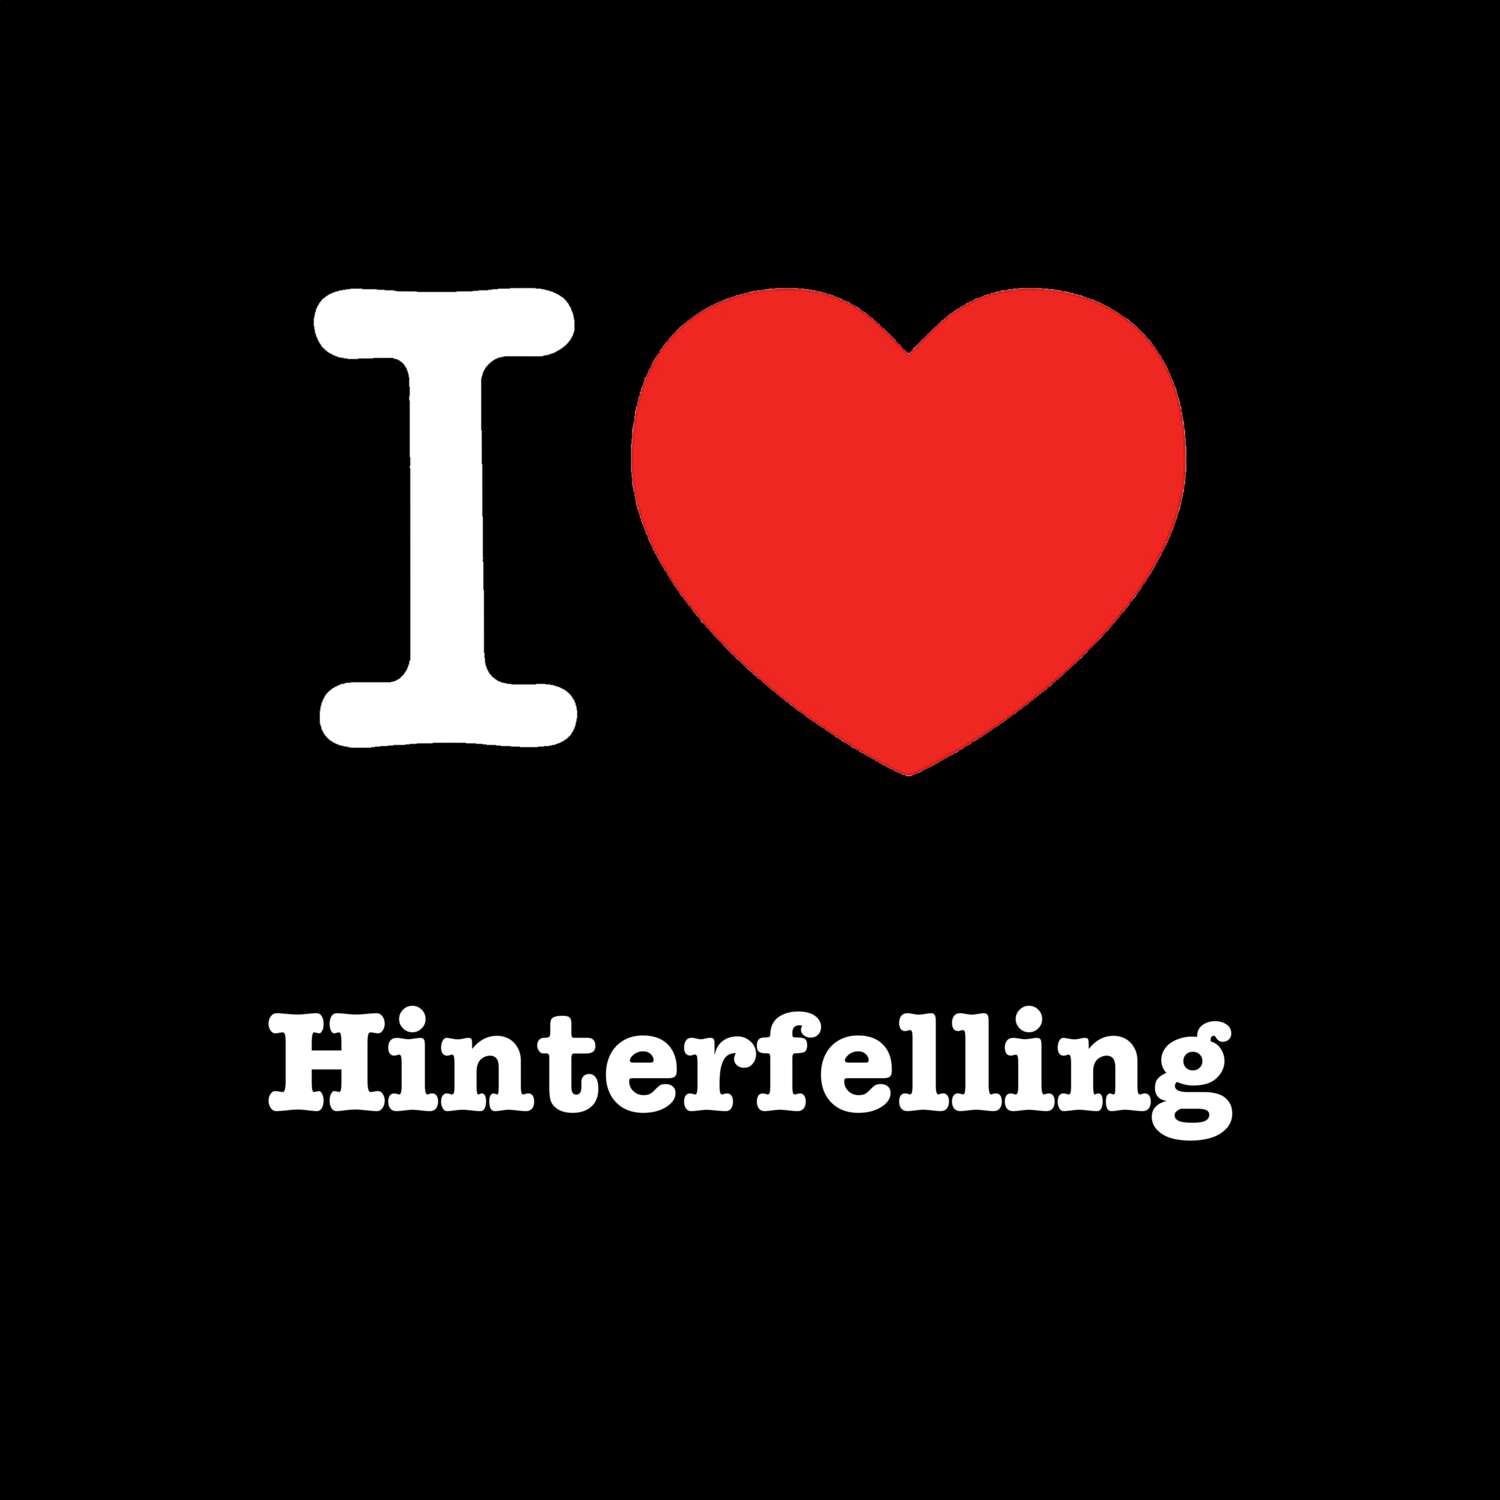 Hinterfelling T-Shirt »I love«